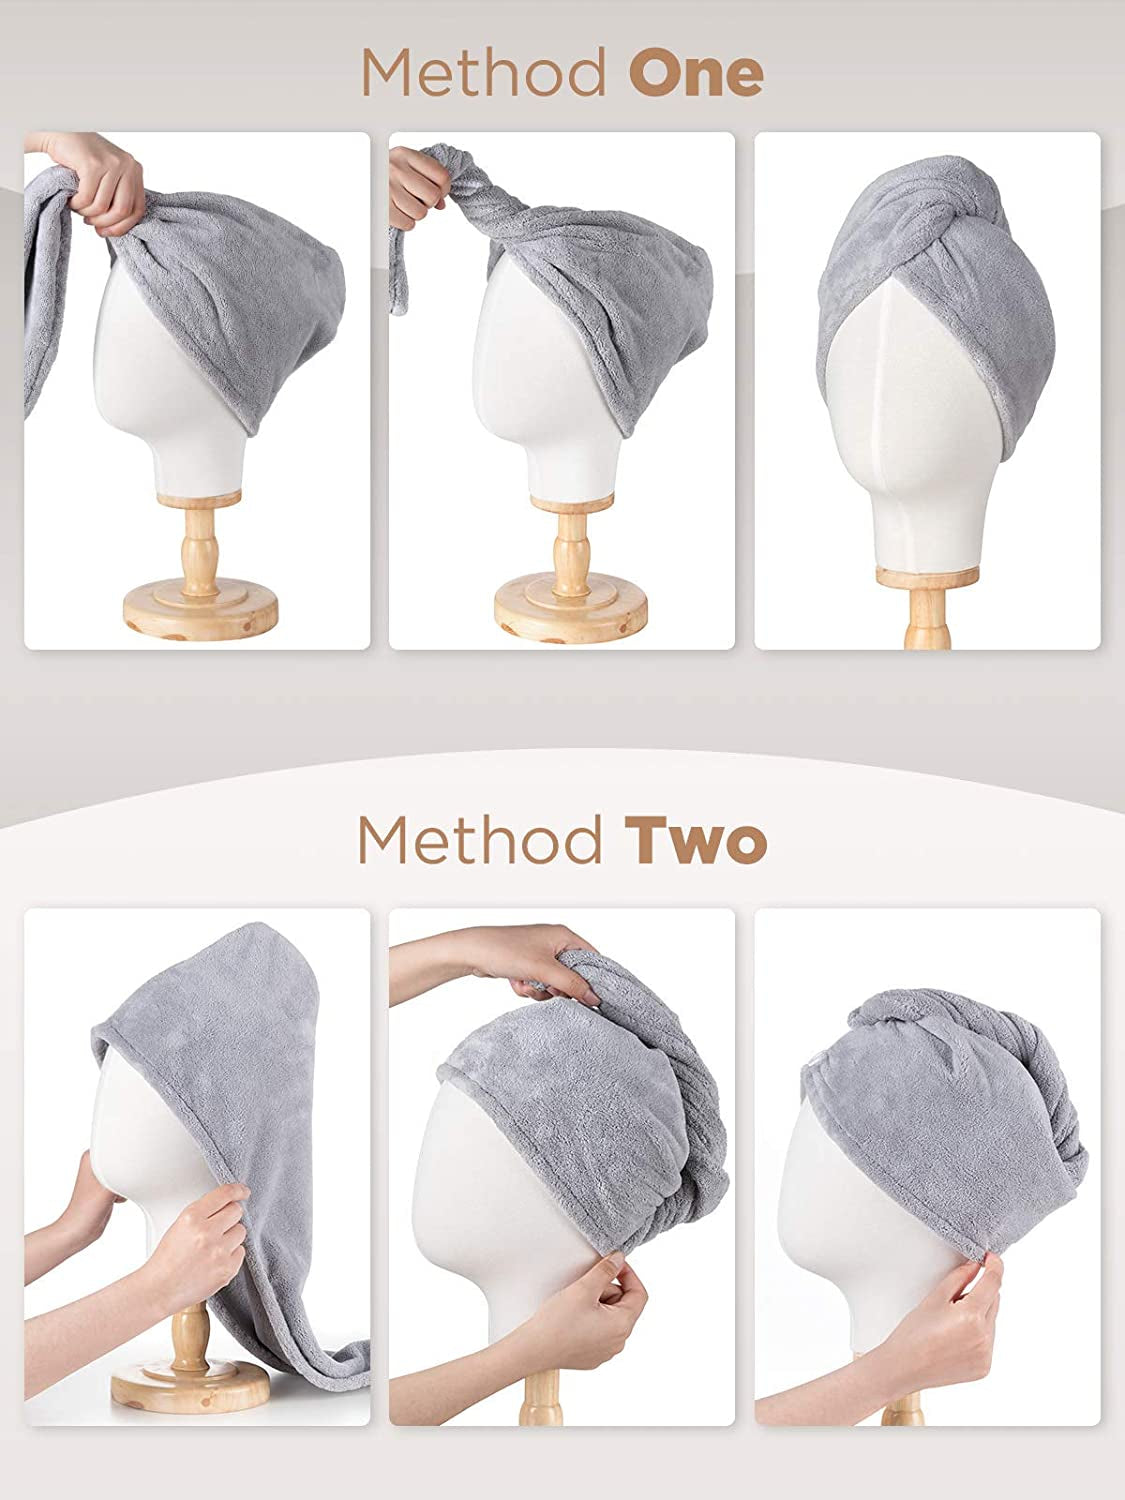 Spring Microfiber Hair Towel, 3 Packs Hair Turbans 